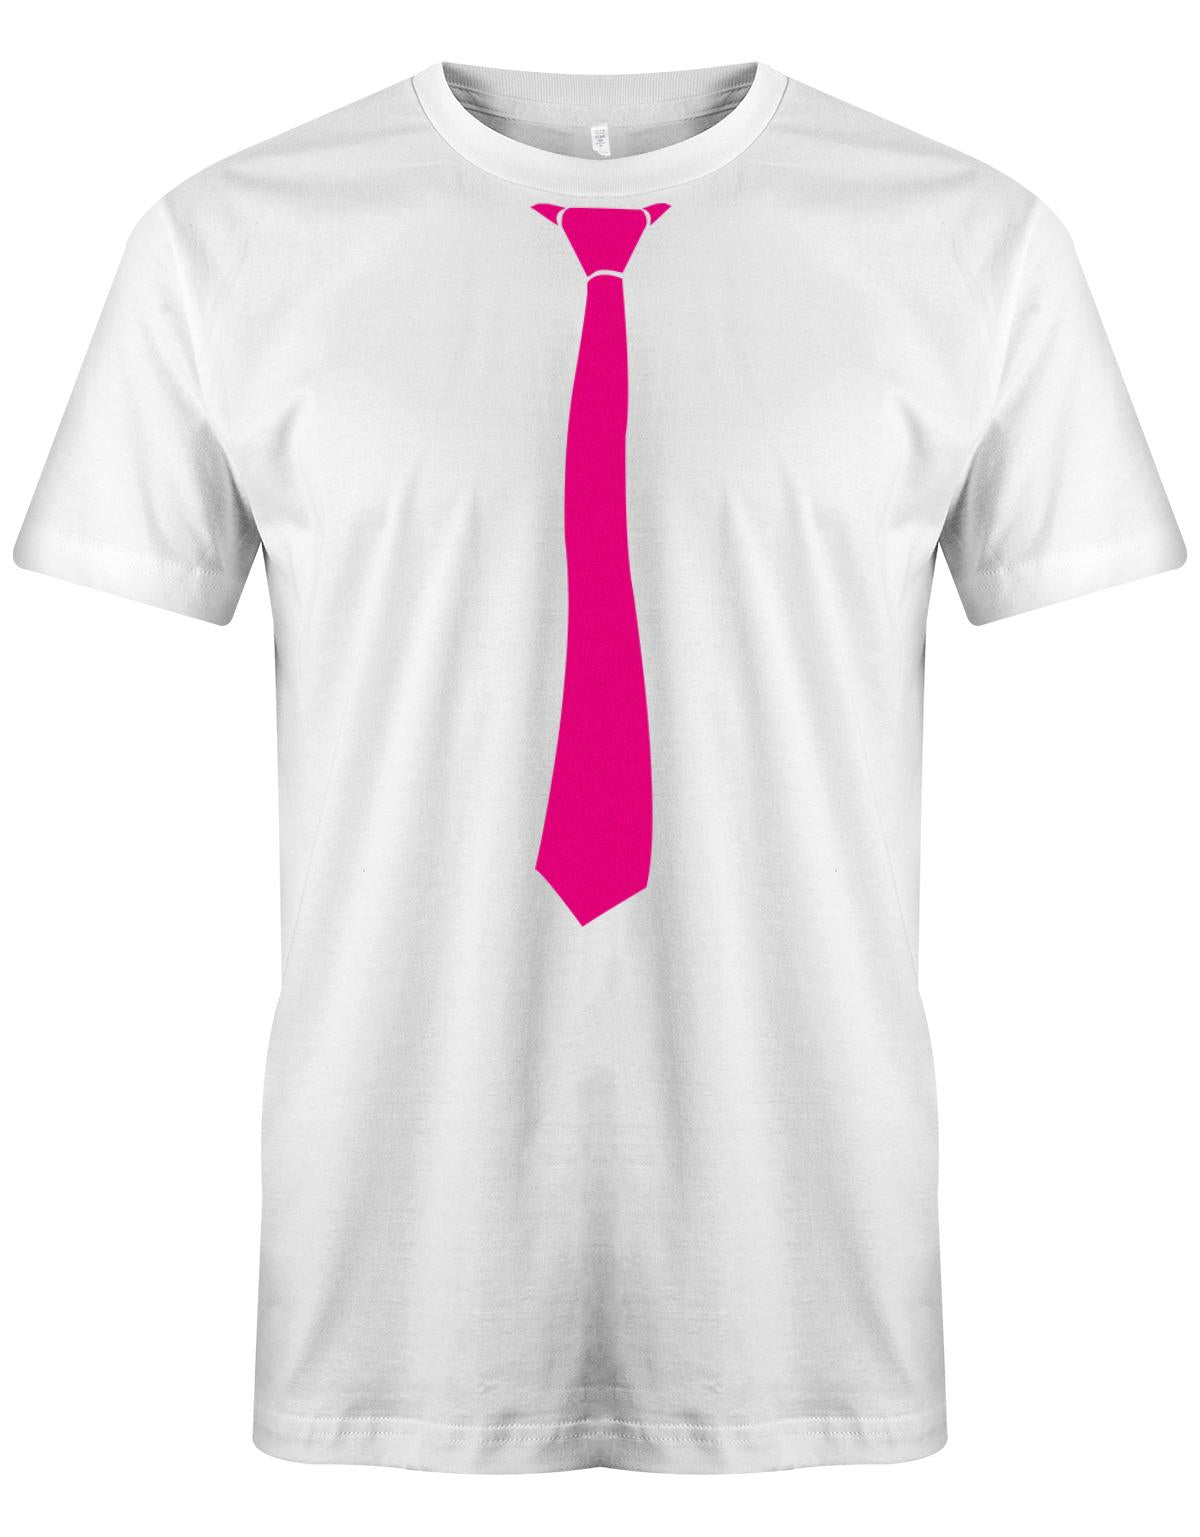 Krawatte-Sportlich-Herren-Shirt-JGA-Weiss-Pink